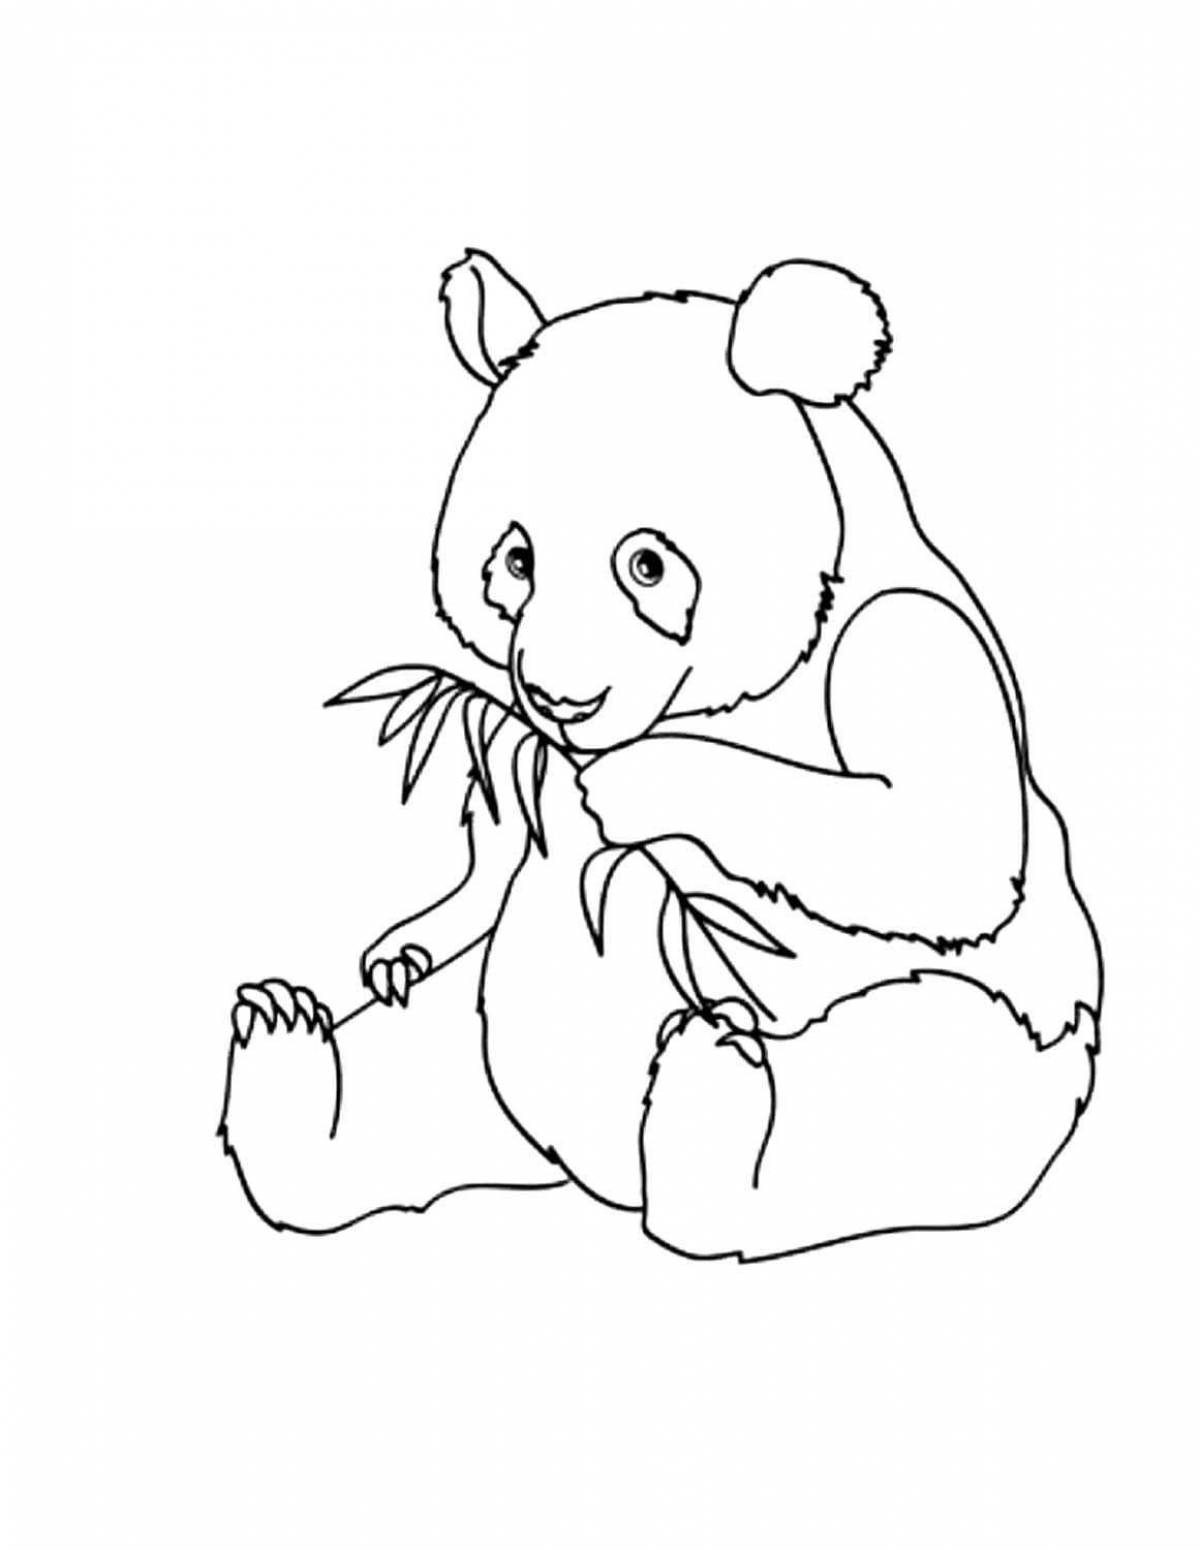 Live panda coloring page